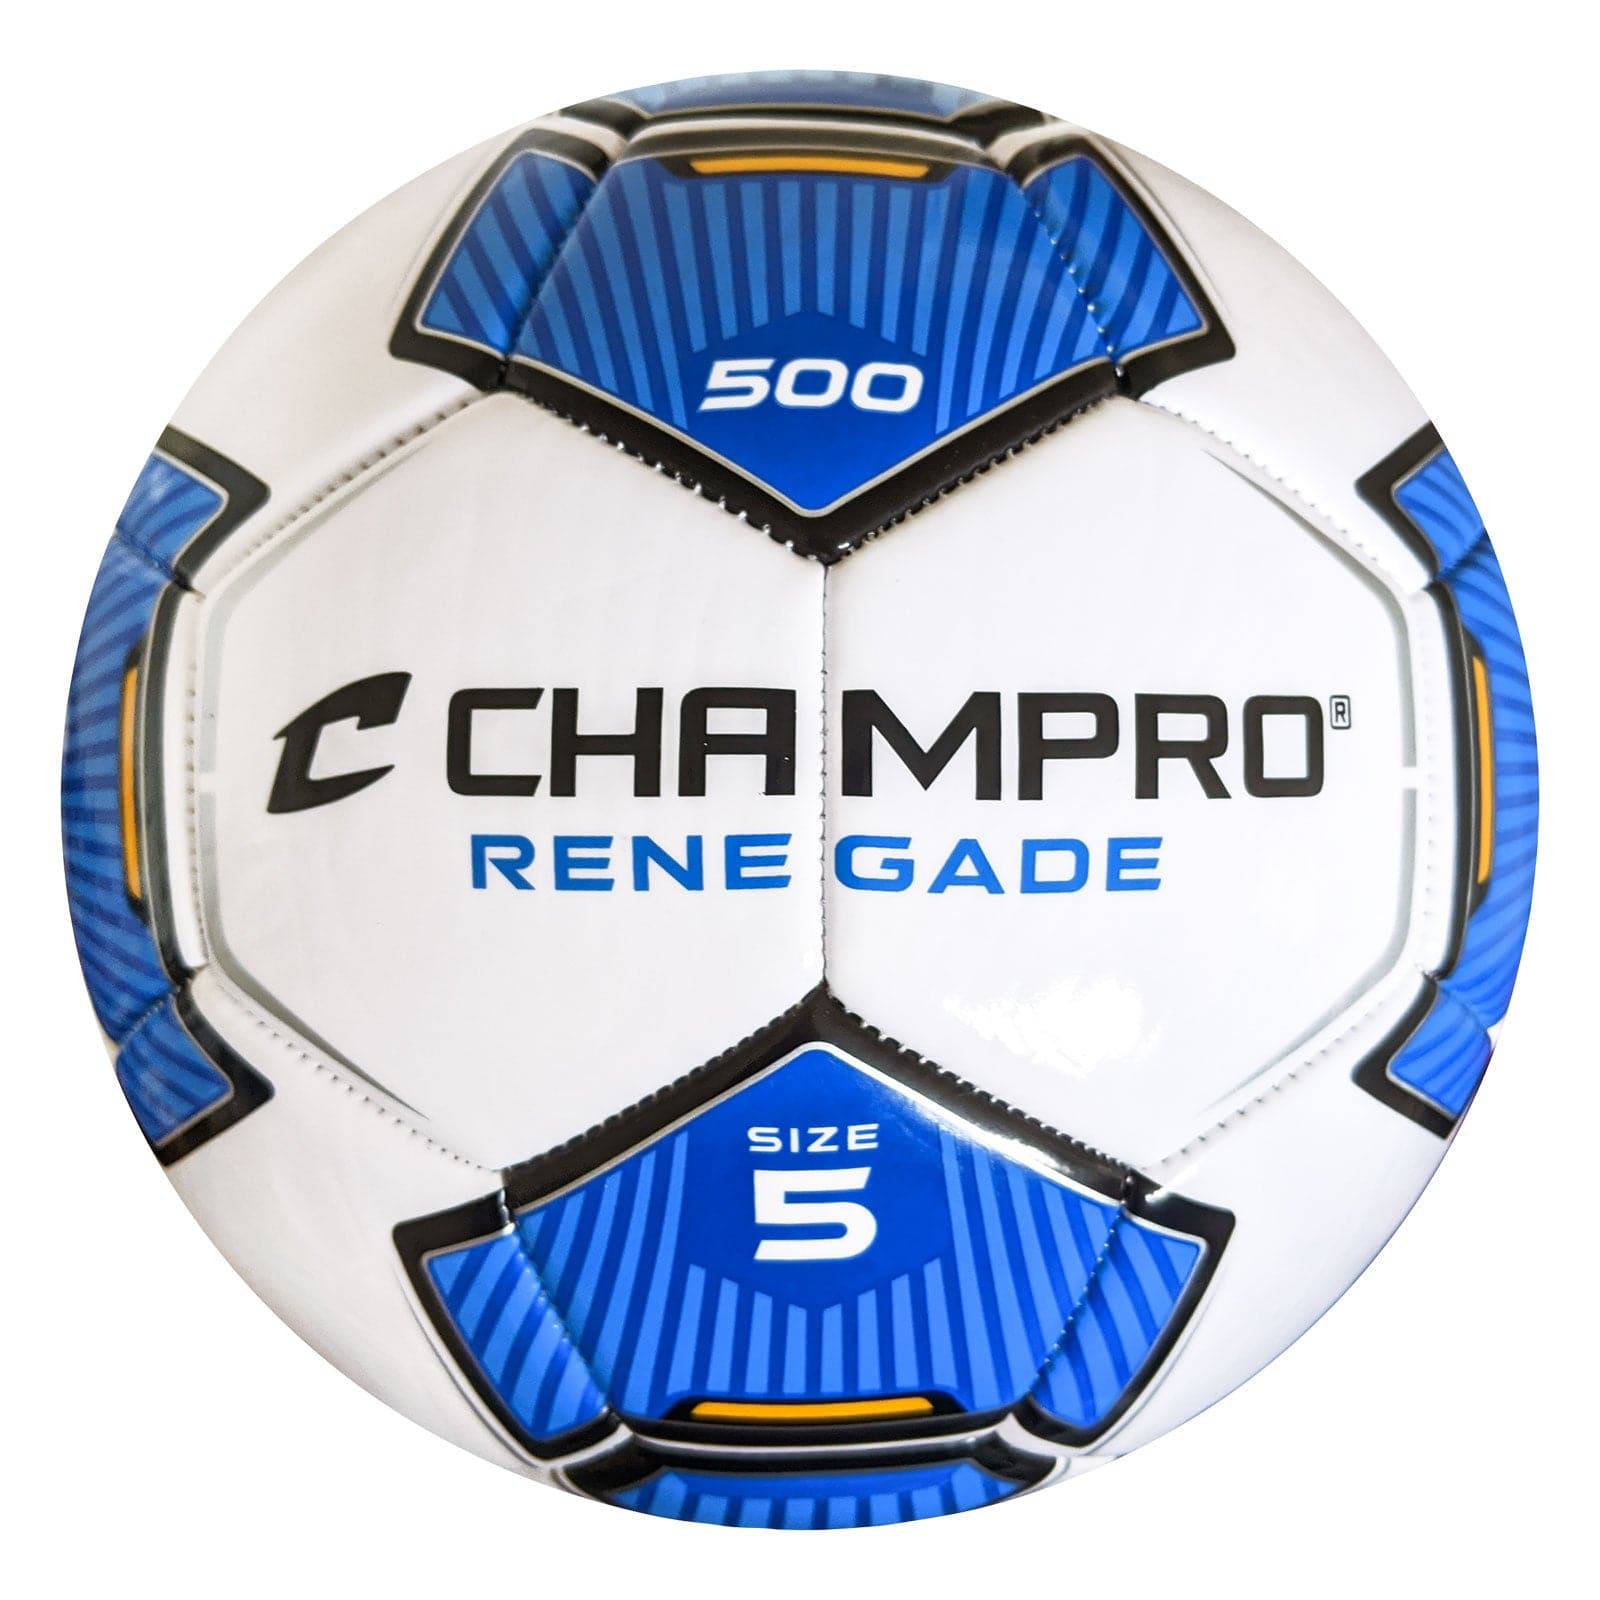 Champro Renegade 500 Soccer Balls